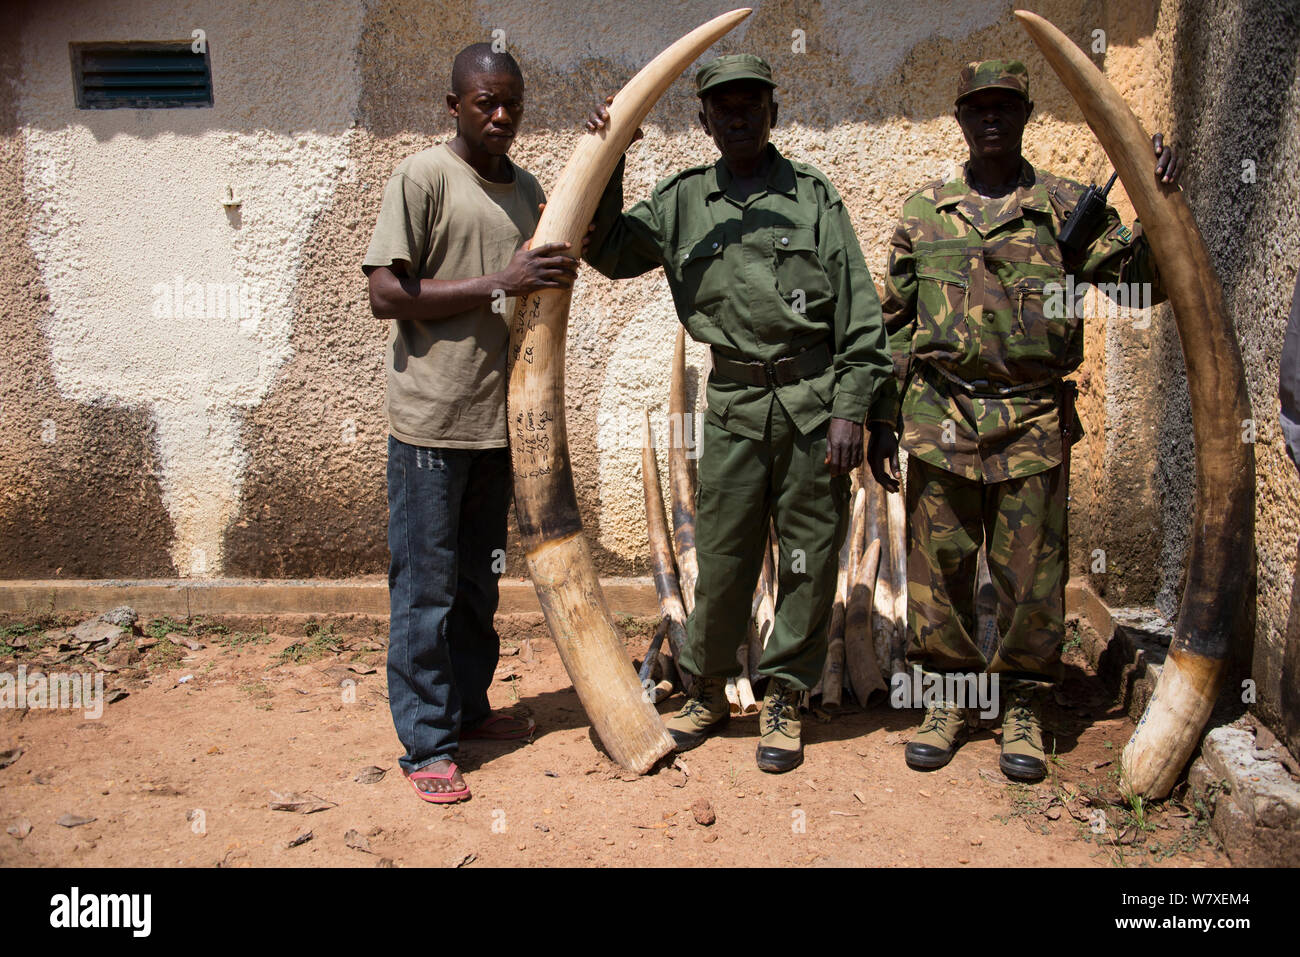 Park Rangers Holding beschlagnahmt Waldelefant Hauer tusks (Loxodonta cyclotis), Garamba National Park in der Demokratischen Republik Kongo. Stockfoto